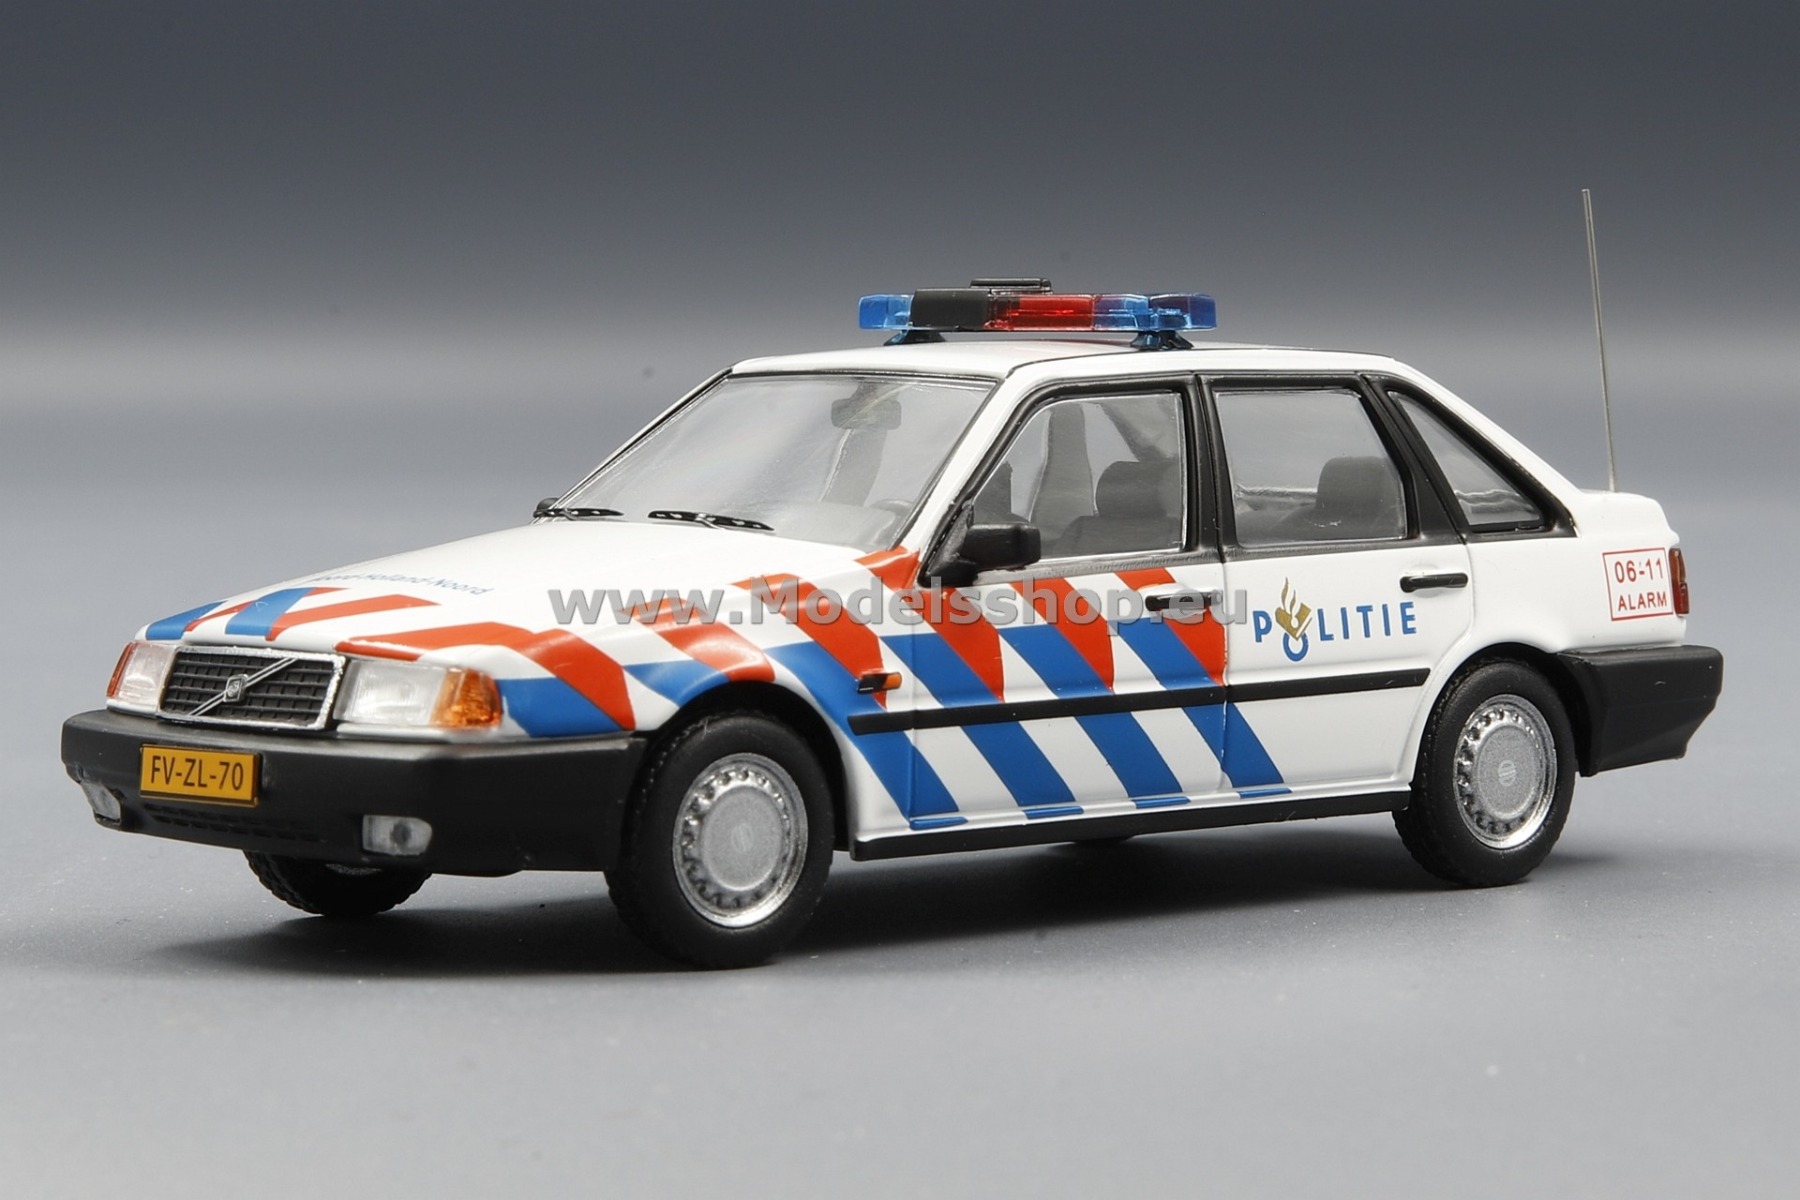 Volvo 440 1992, Rijkspolitie District Alkmaar / Dutch state police